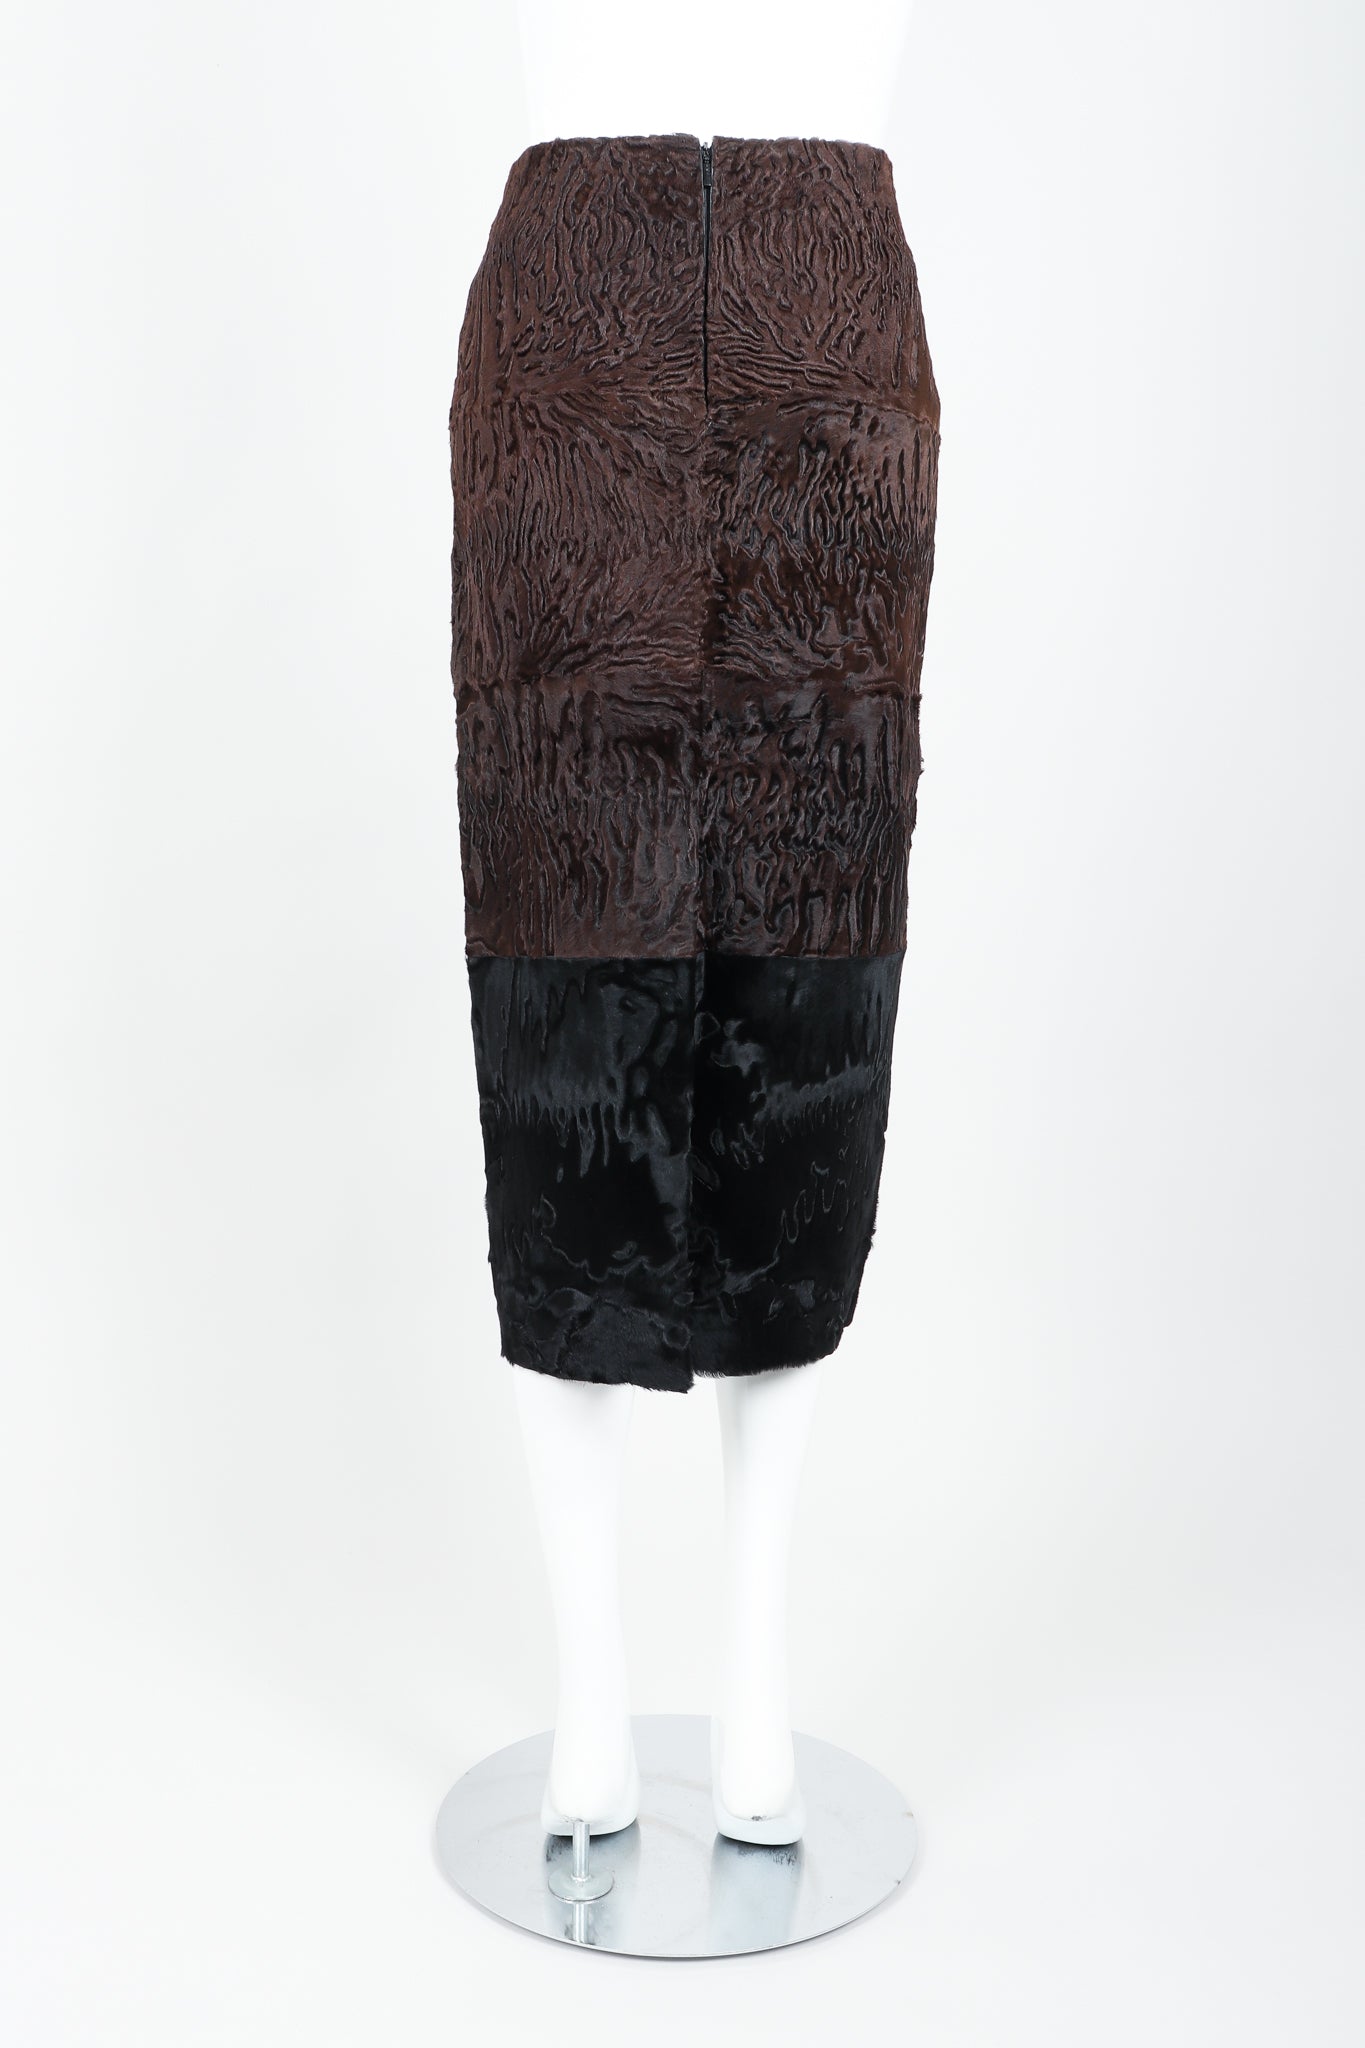 Vintage Fendi Persian Lamb Fur Midi Pencil Skirt on Mannequin back at Recess Los Angeles